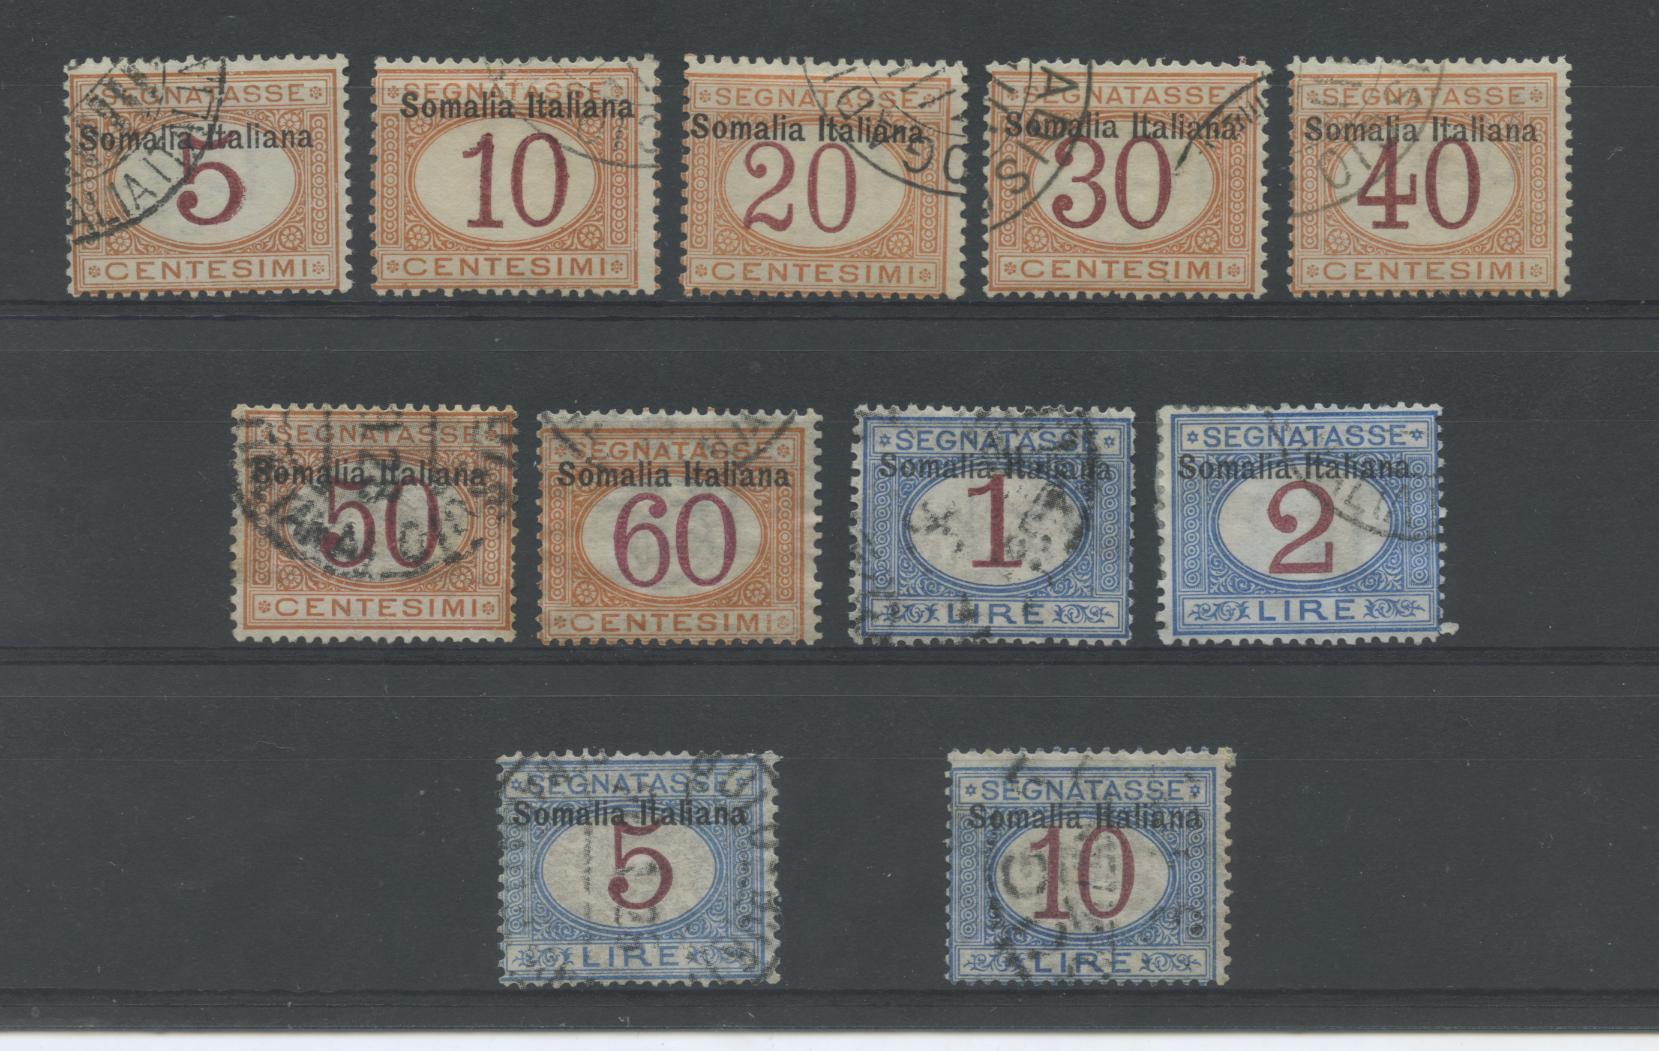 Scansione lotto: COLONIE SOMALIA 1909 TASSE 11V. US.